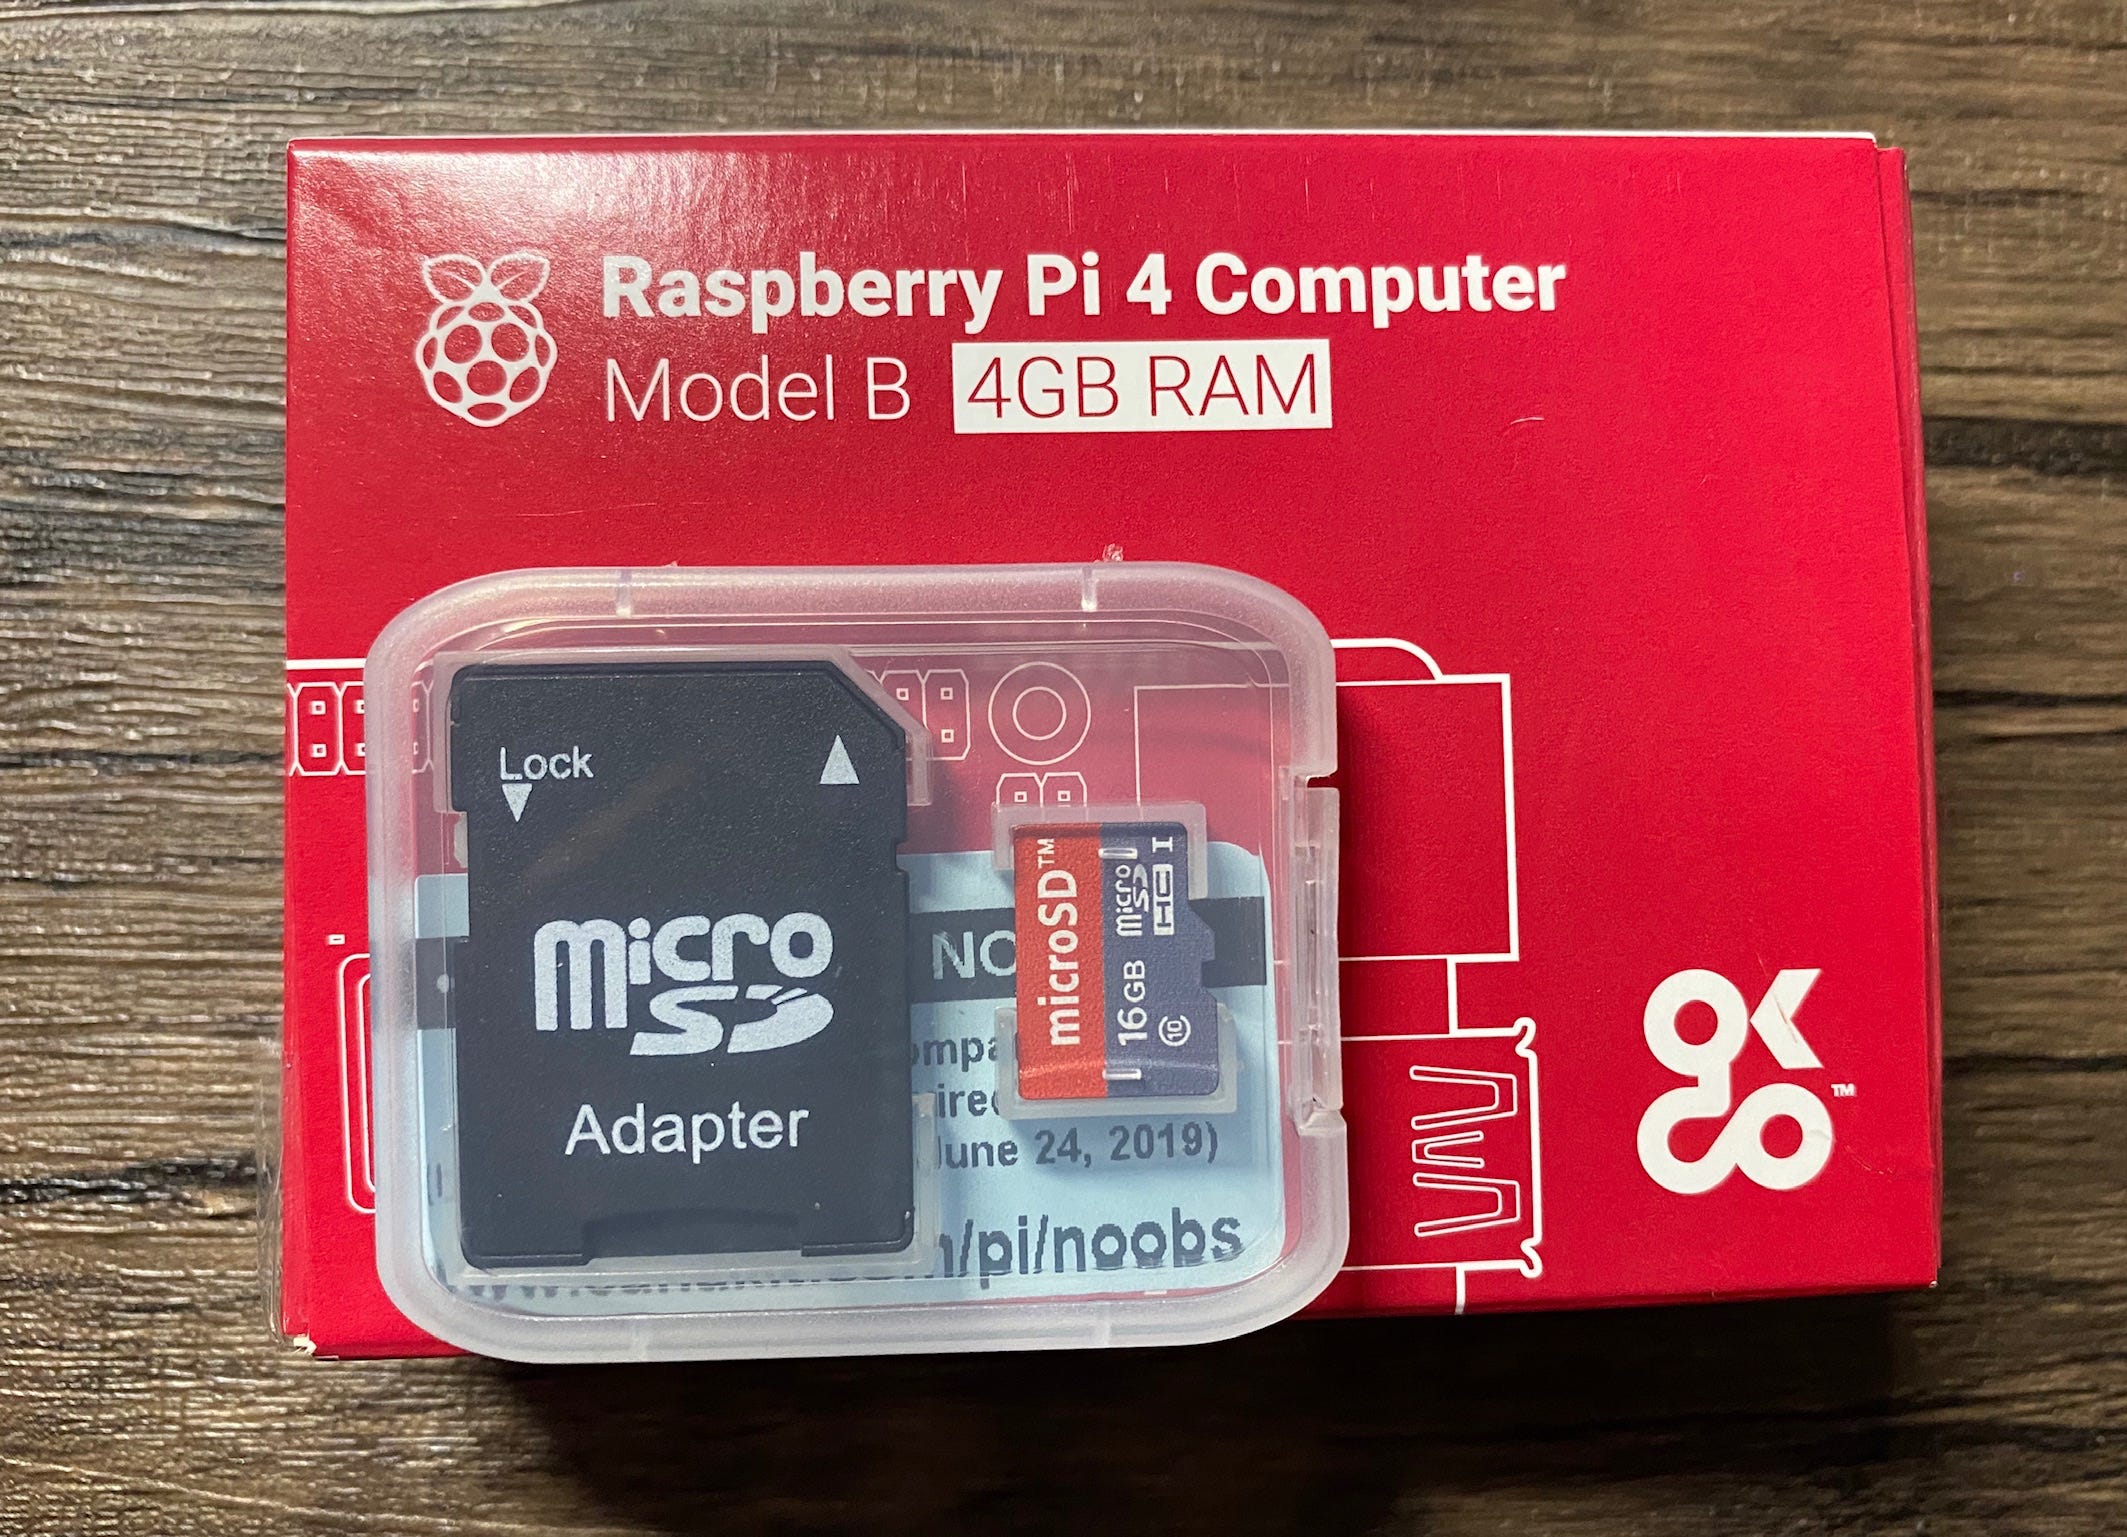 Raspberry Pi: New releases of Raspbian and NOOBS